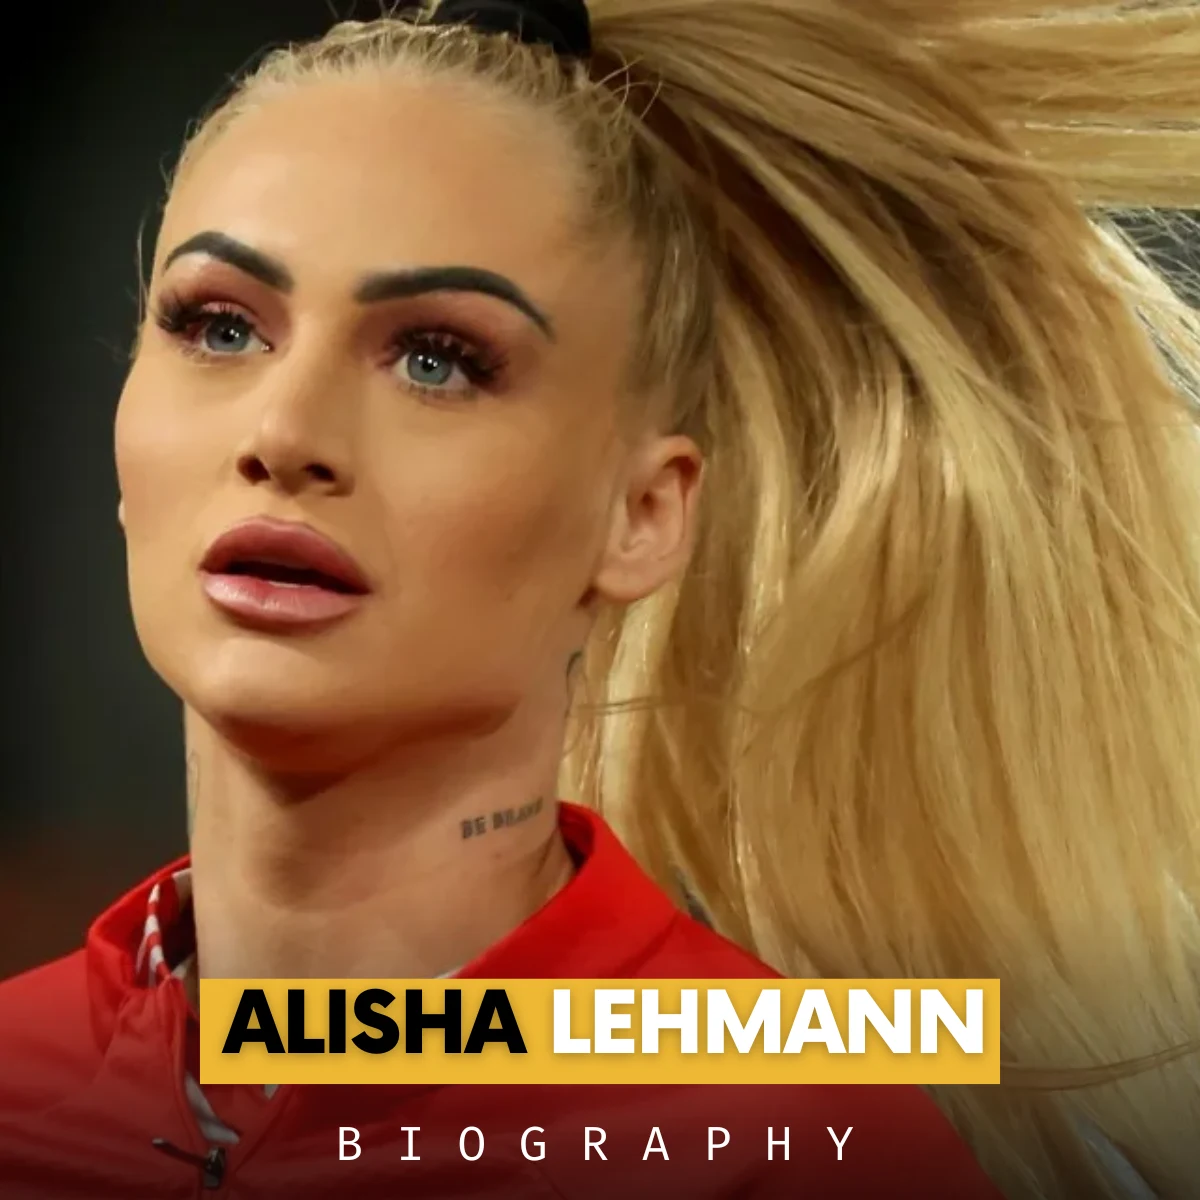 Alisha Lehmann biography